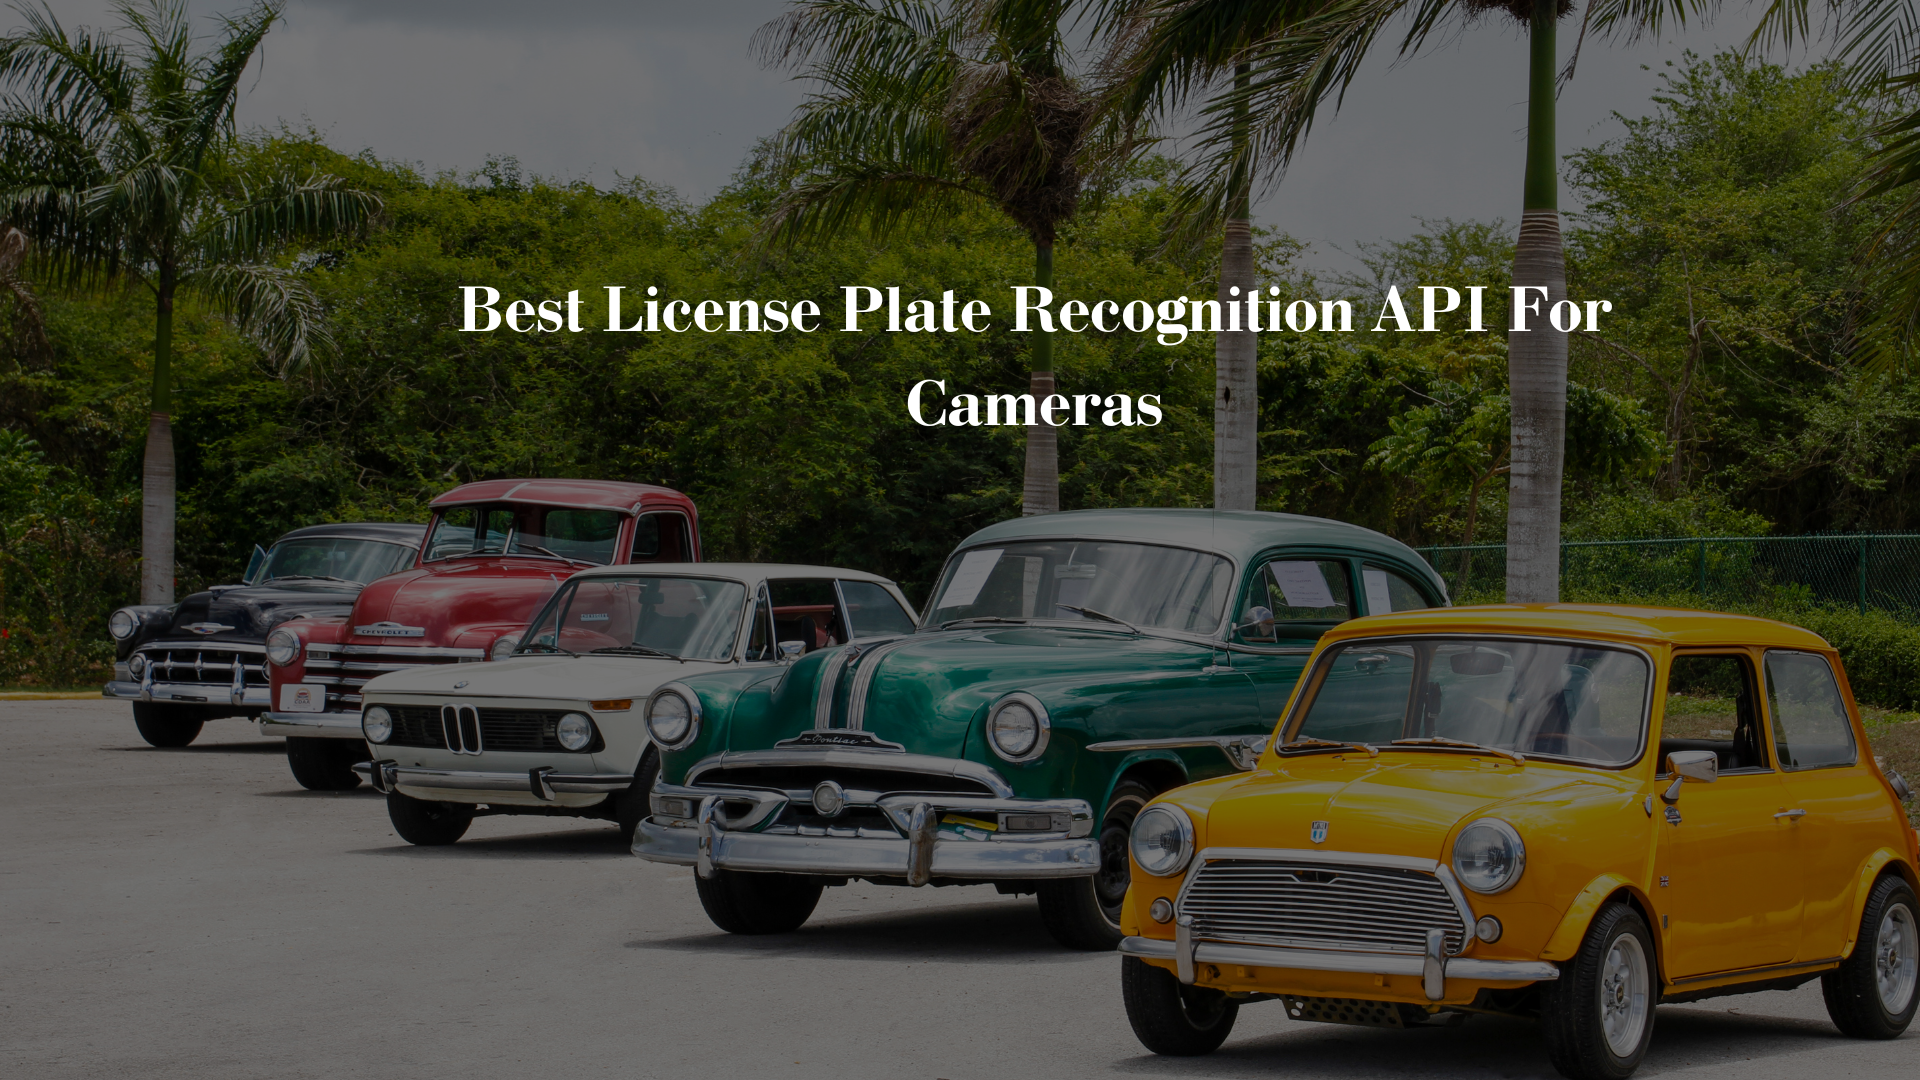 Best License Plate Recognition API For Cameras